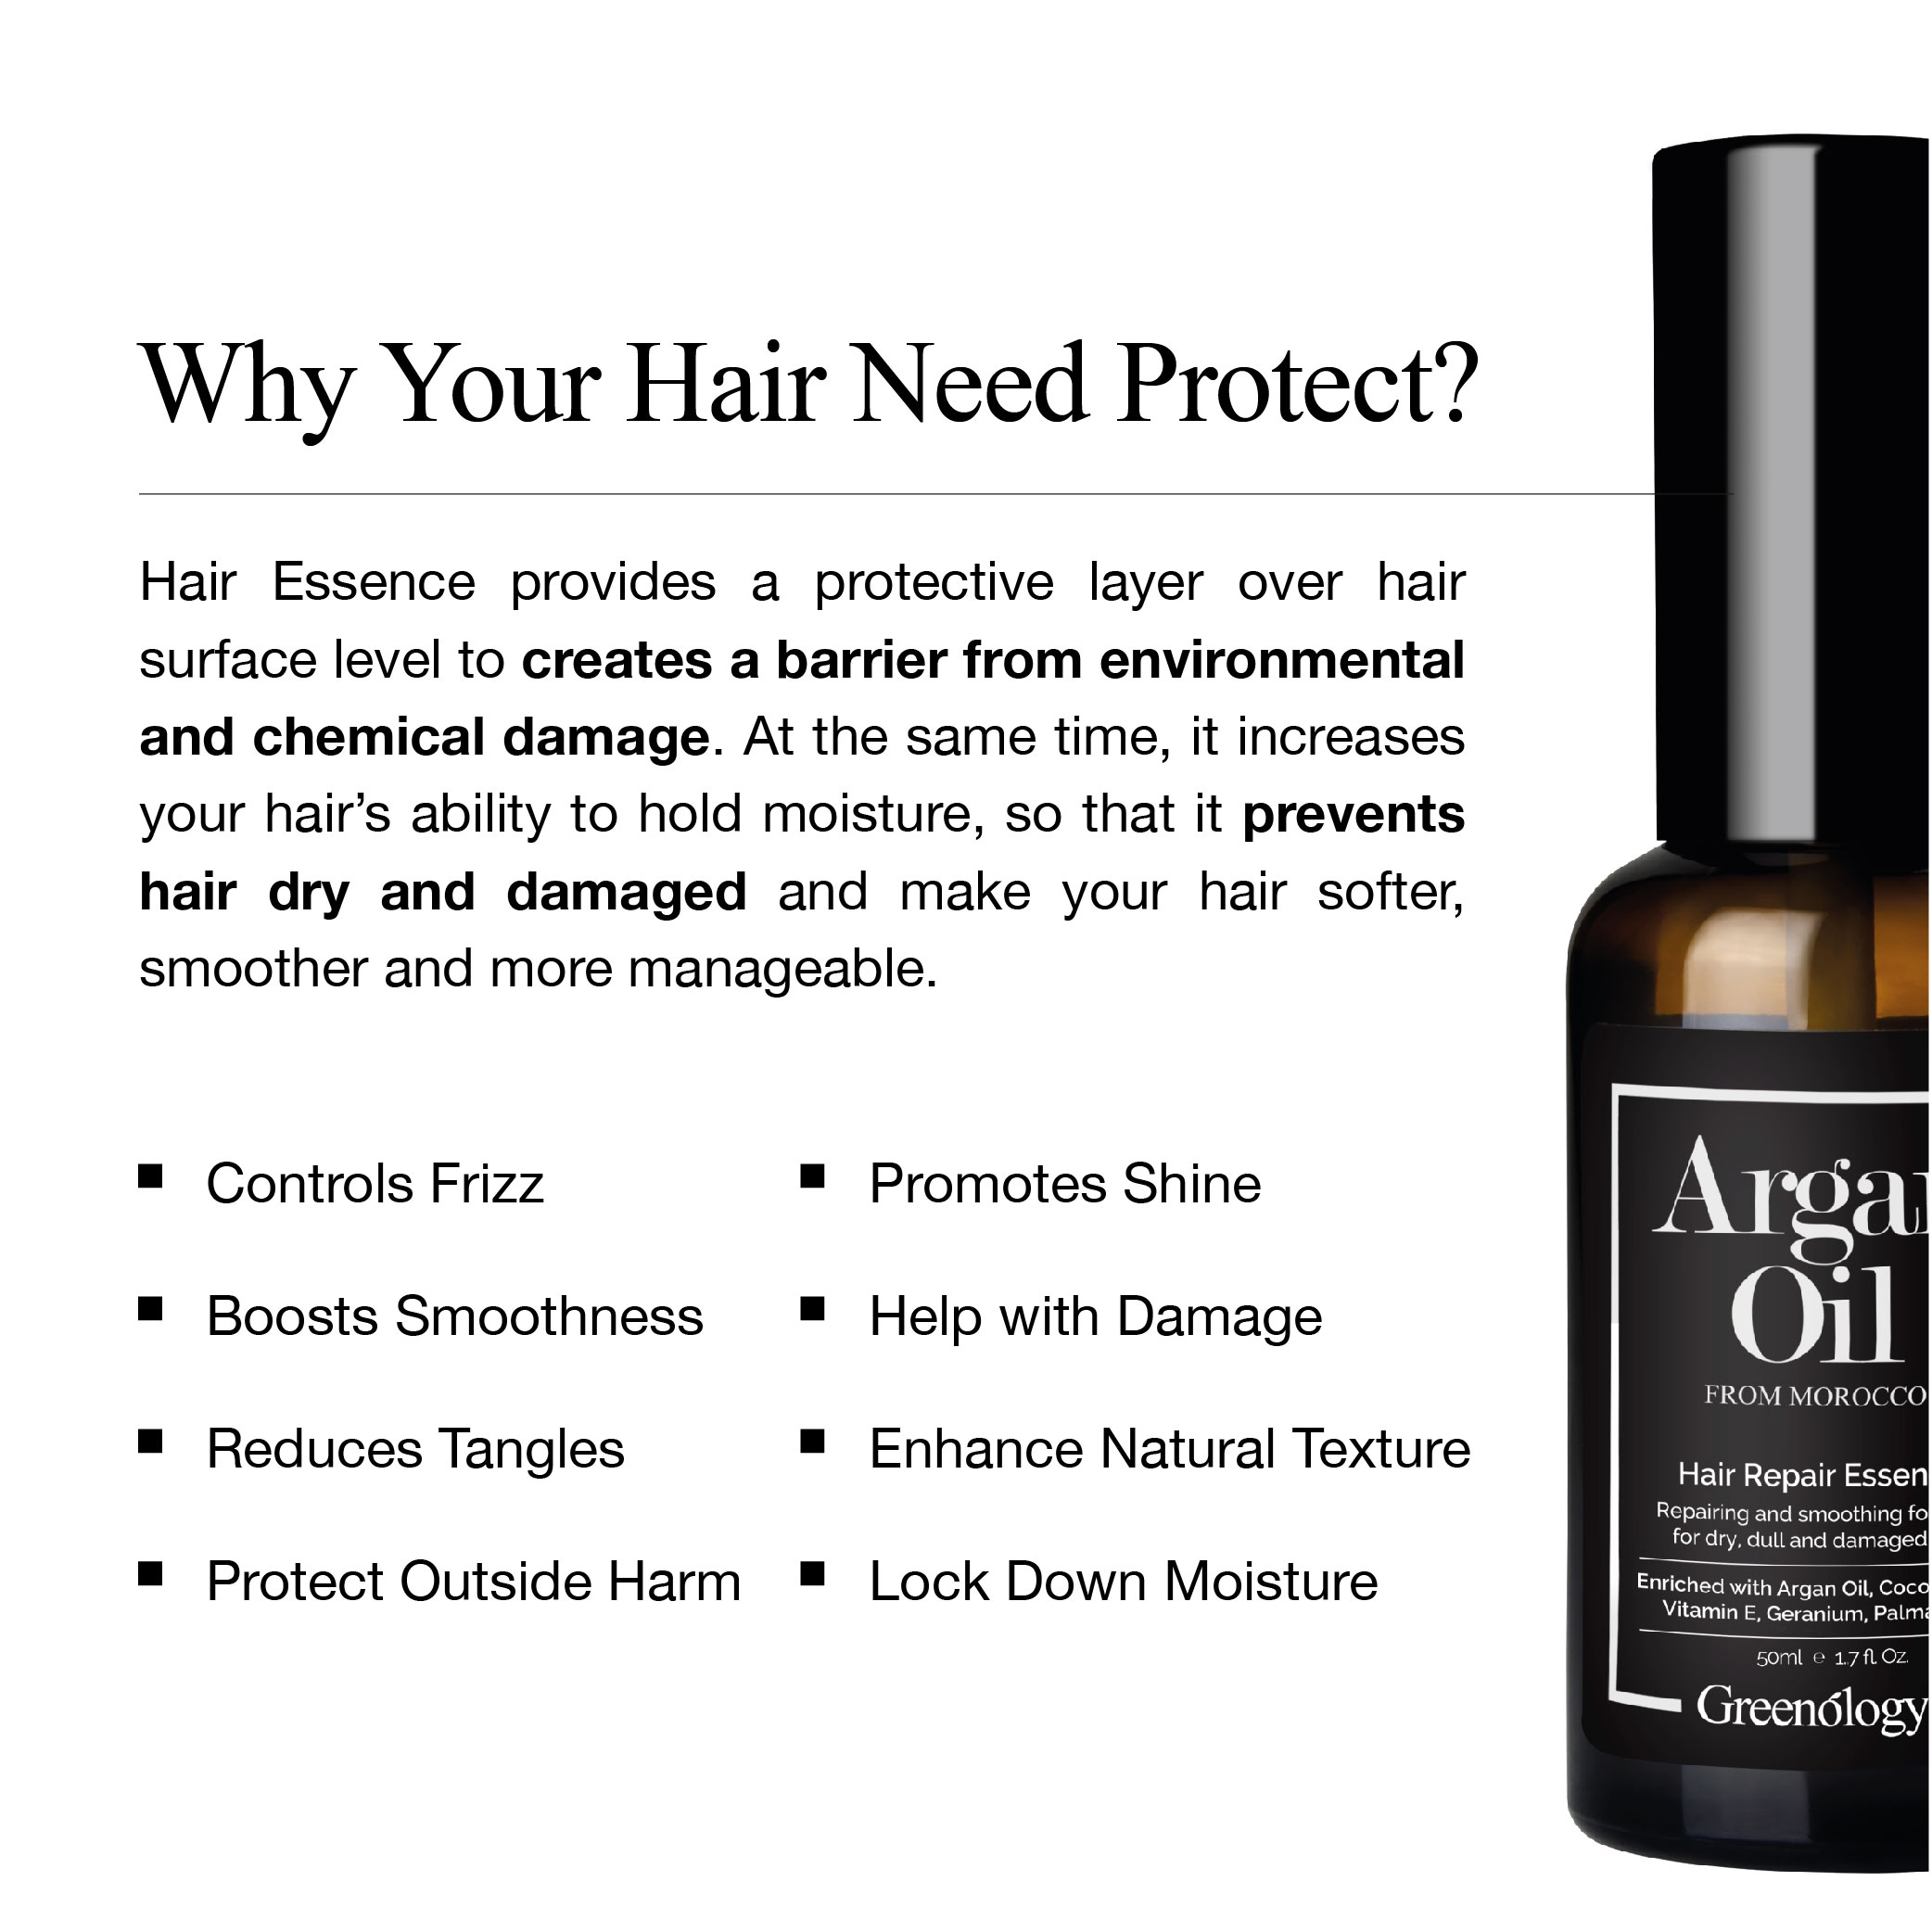 Greenology Argan Oil Hair Repair Essence